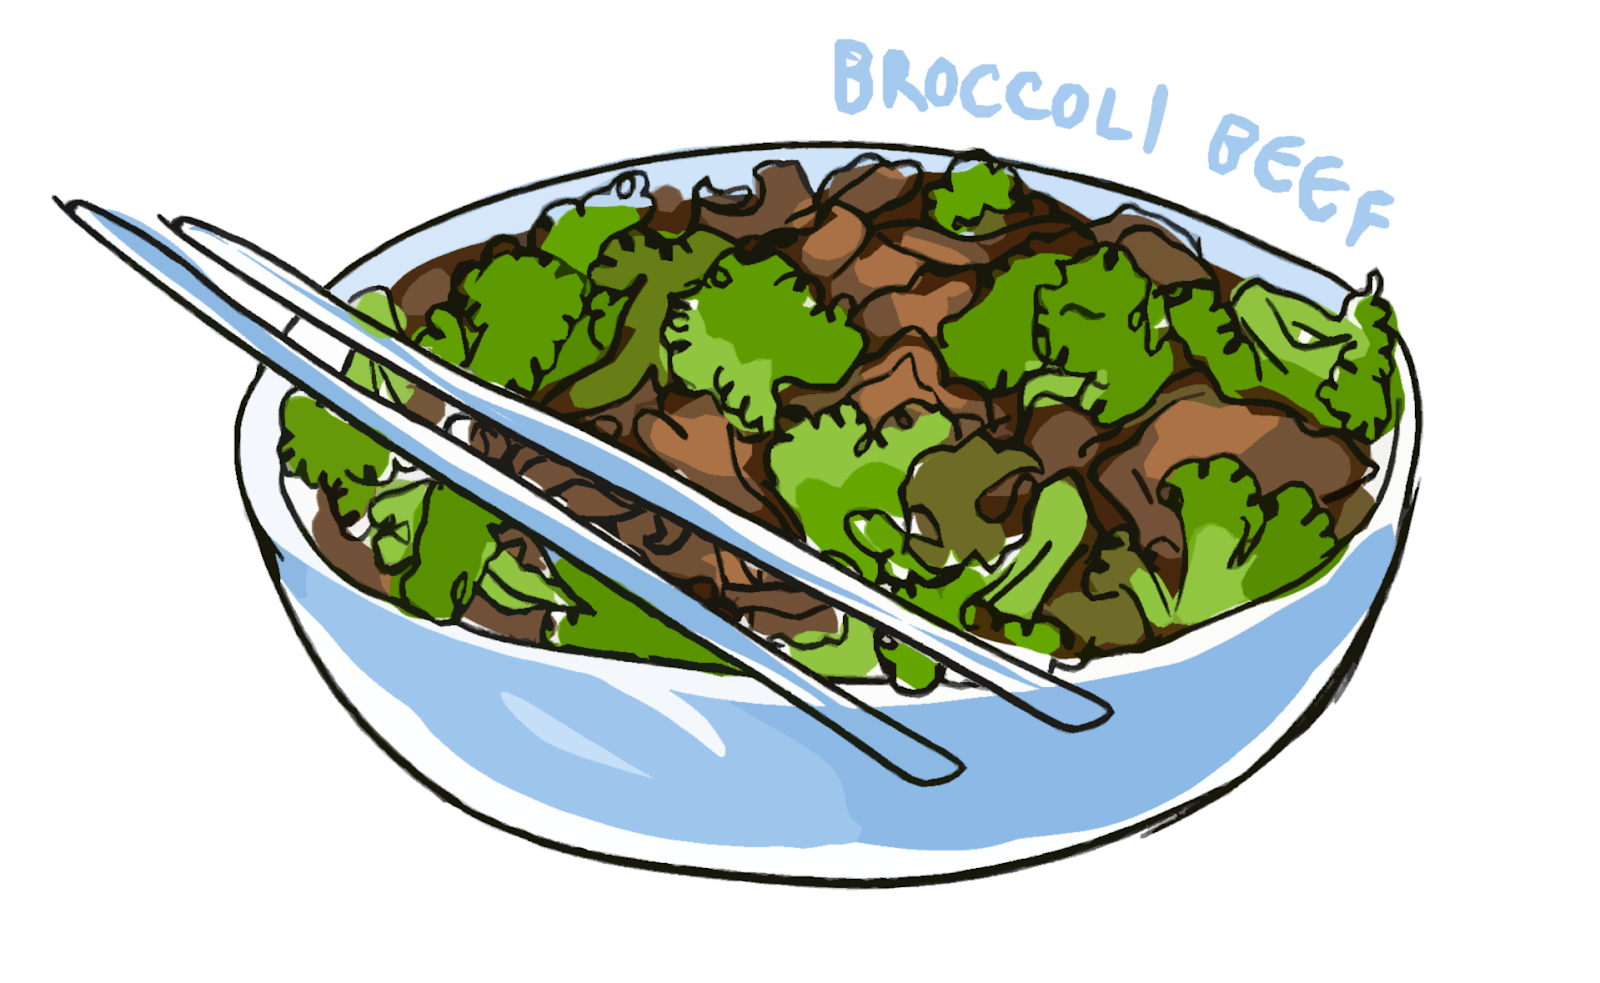 illustration of broccoli beef